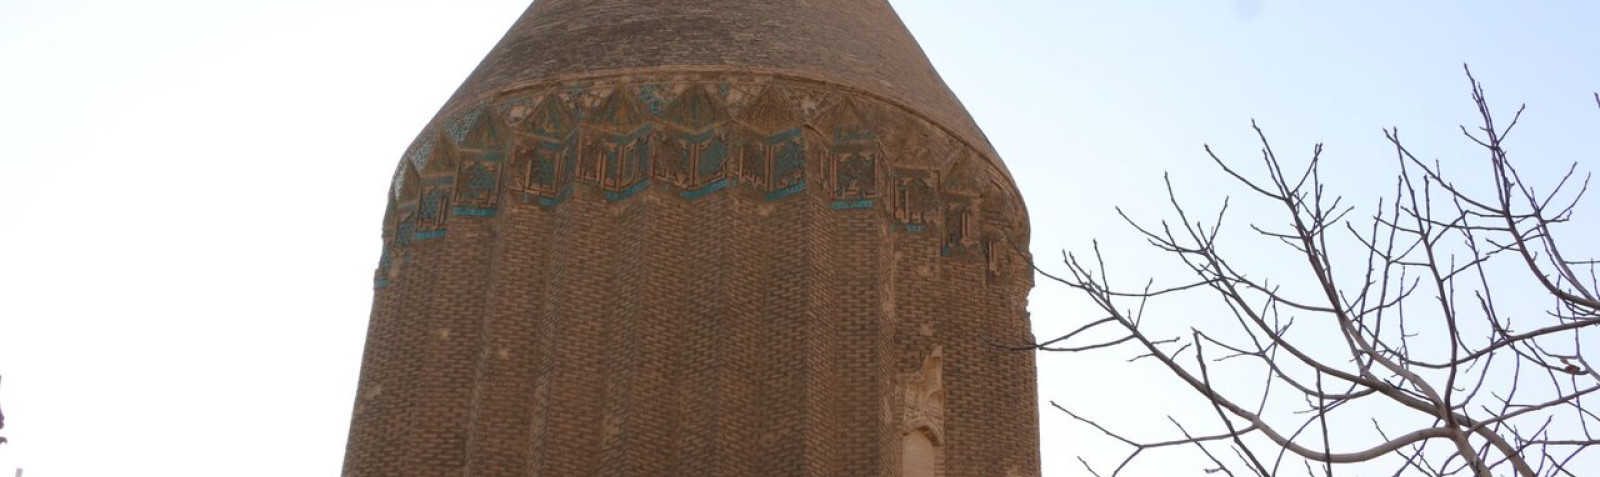 Aladdin OR Ala al-Dawla Tower